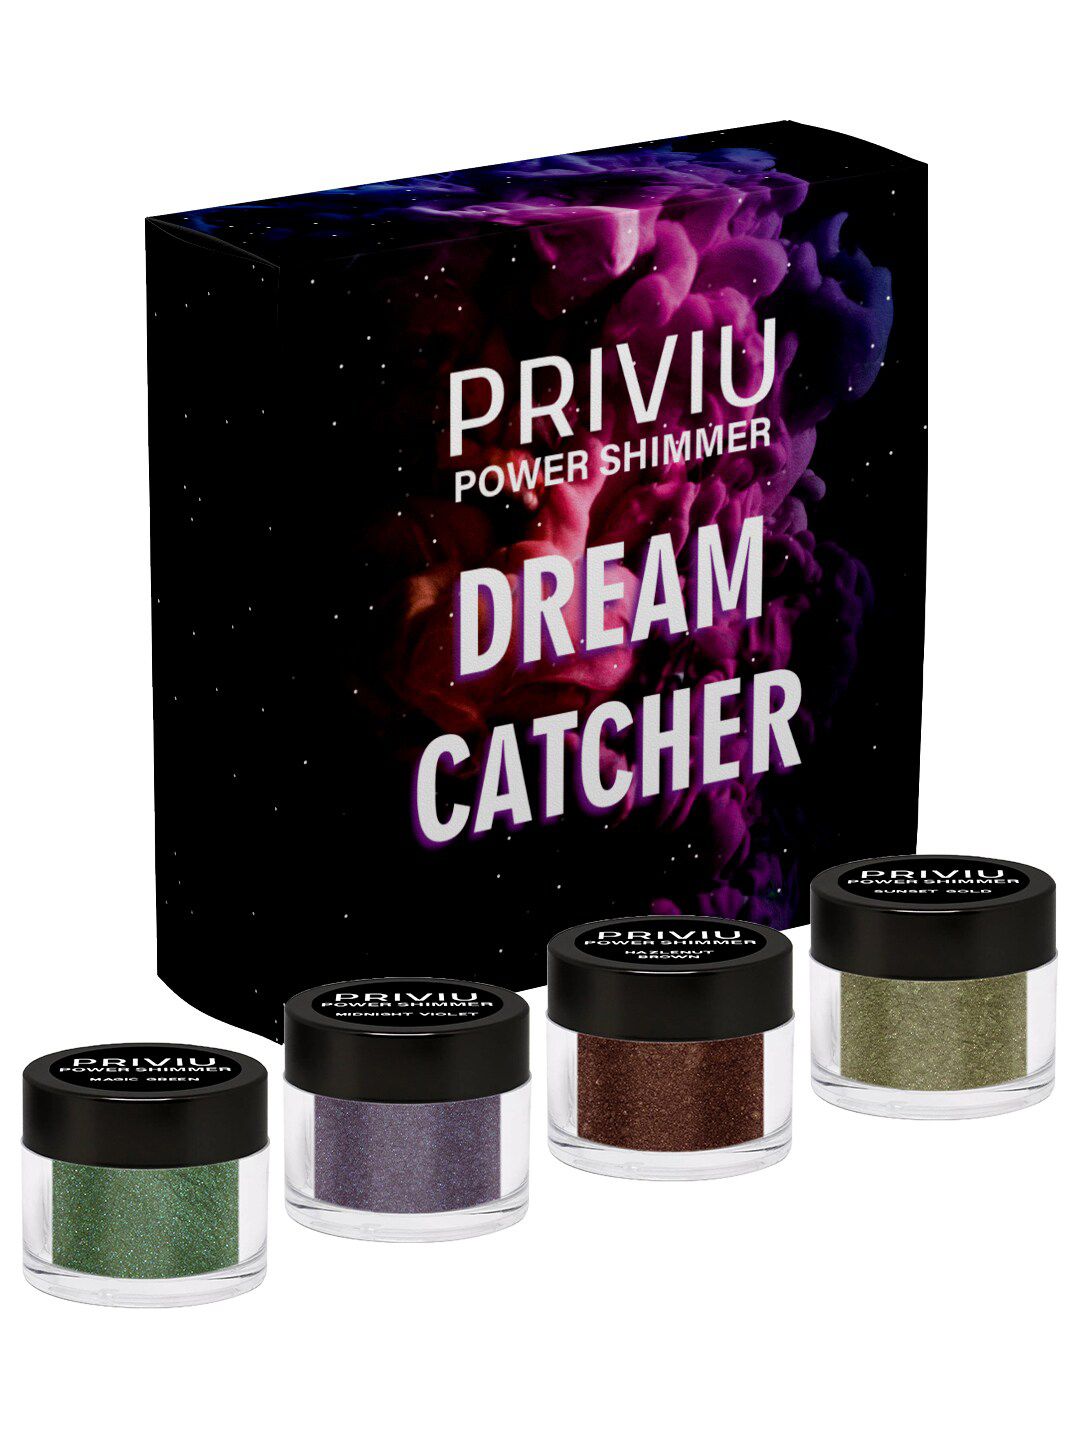 PRIVIU Power Shimmer - Dream Catcher 16 g Price in India